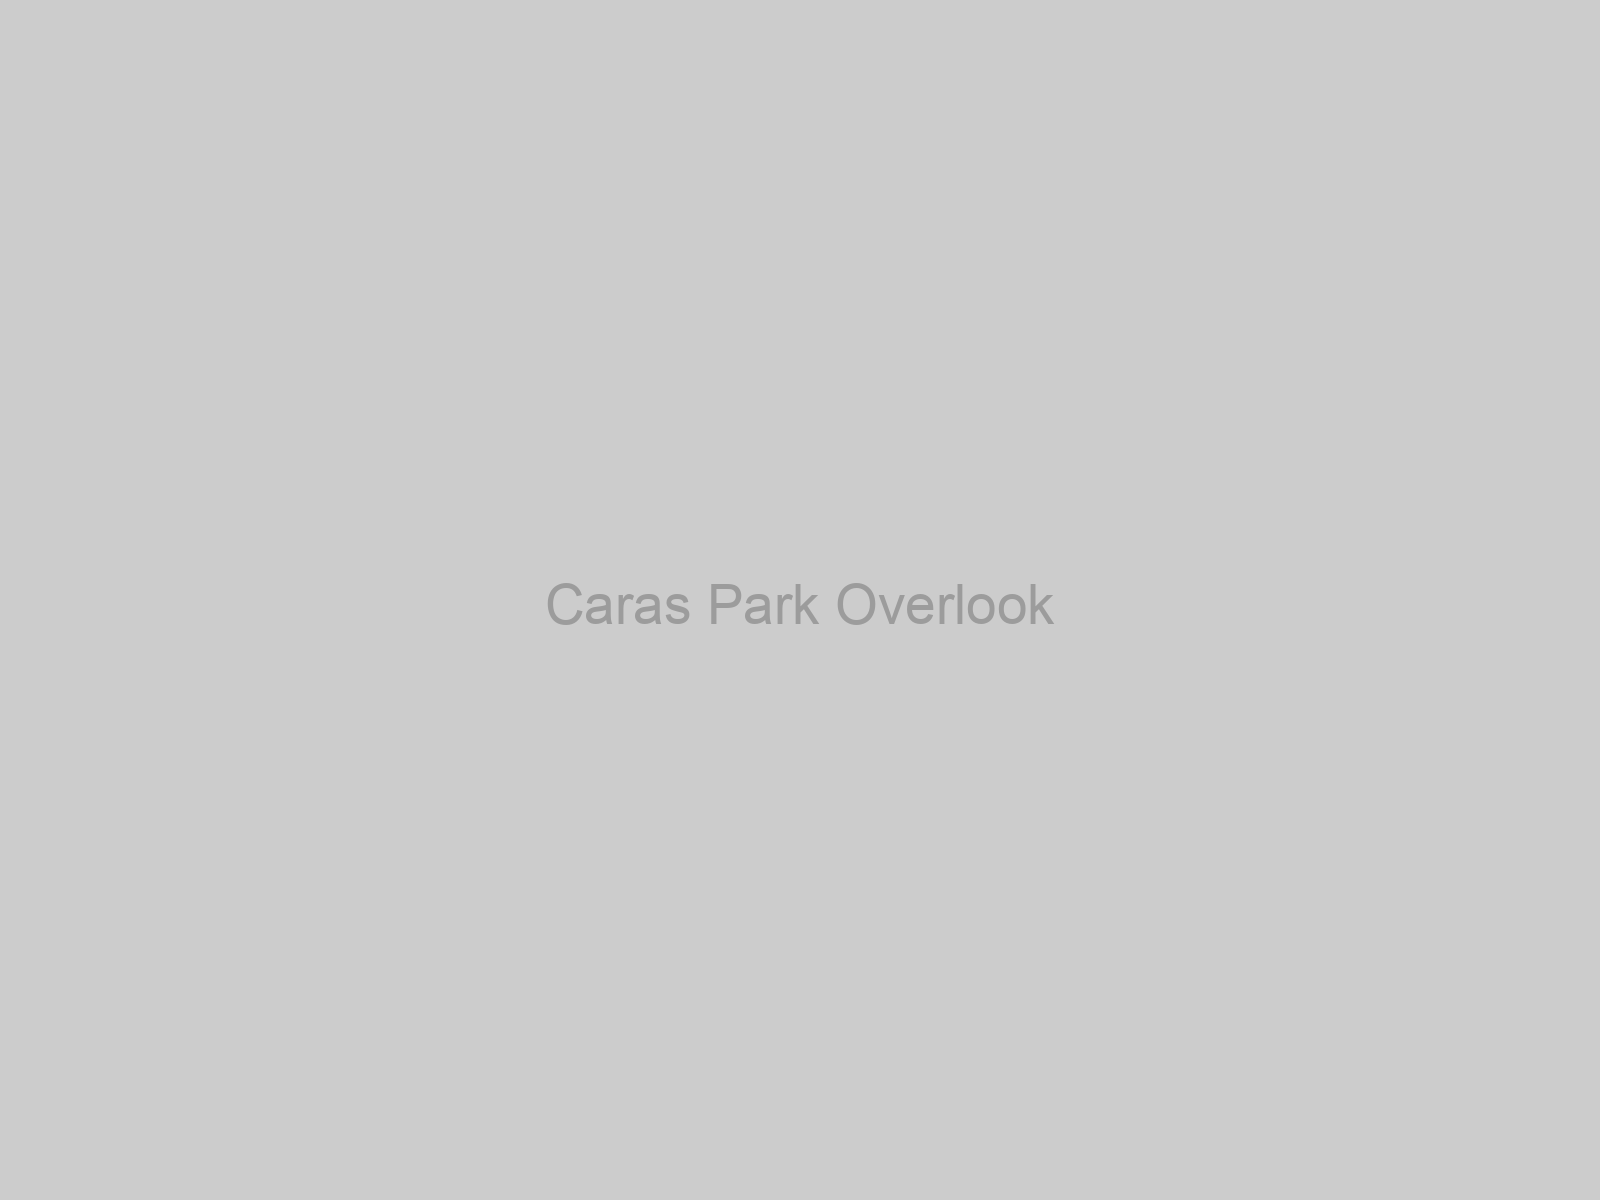 Caras Park Overlook